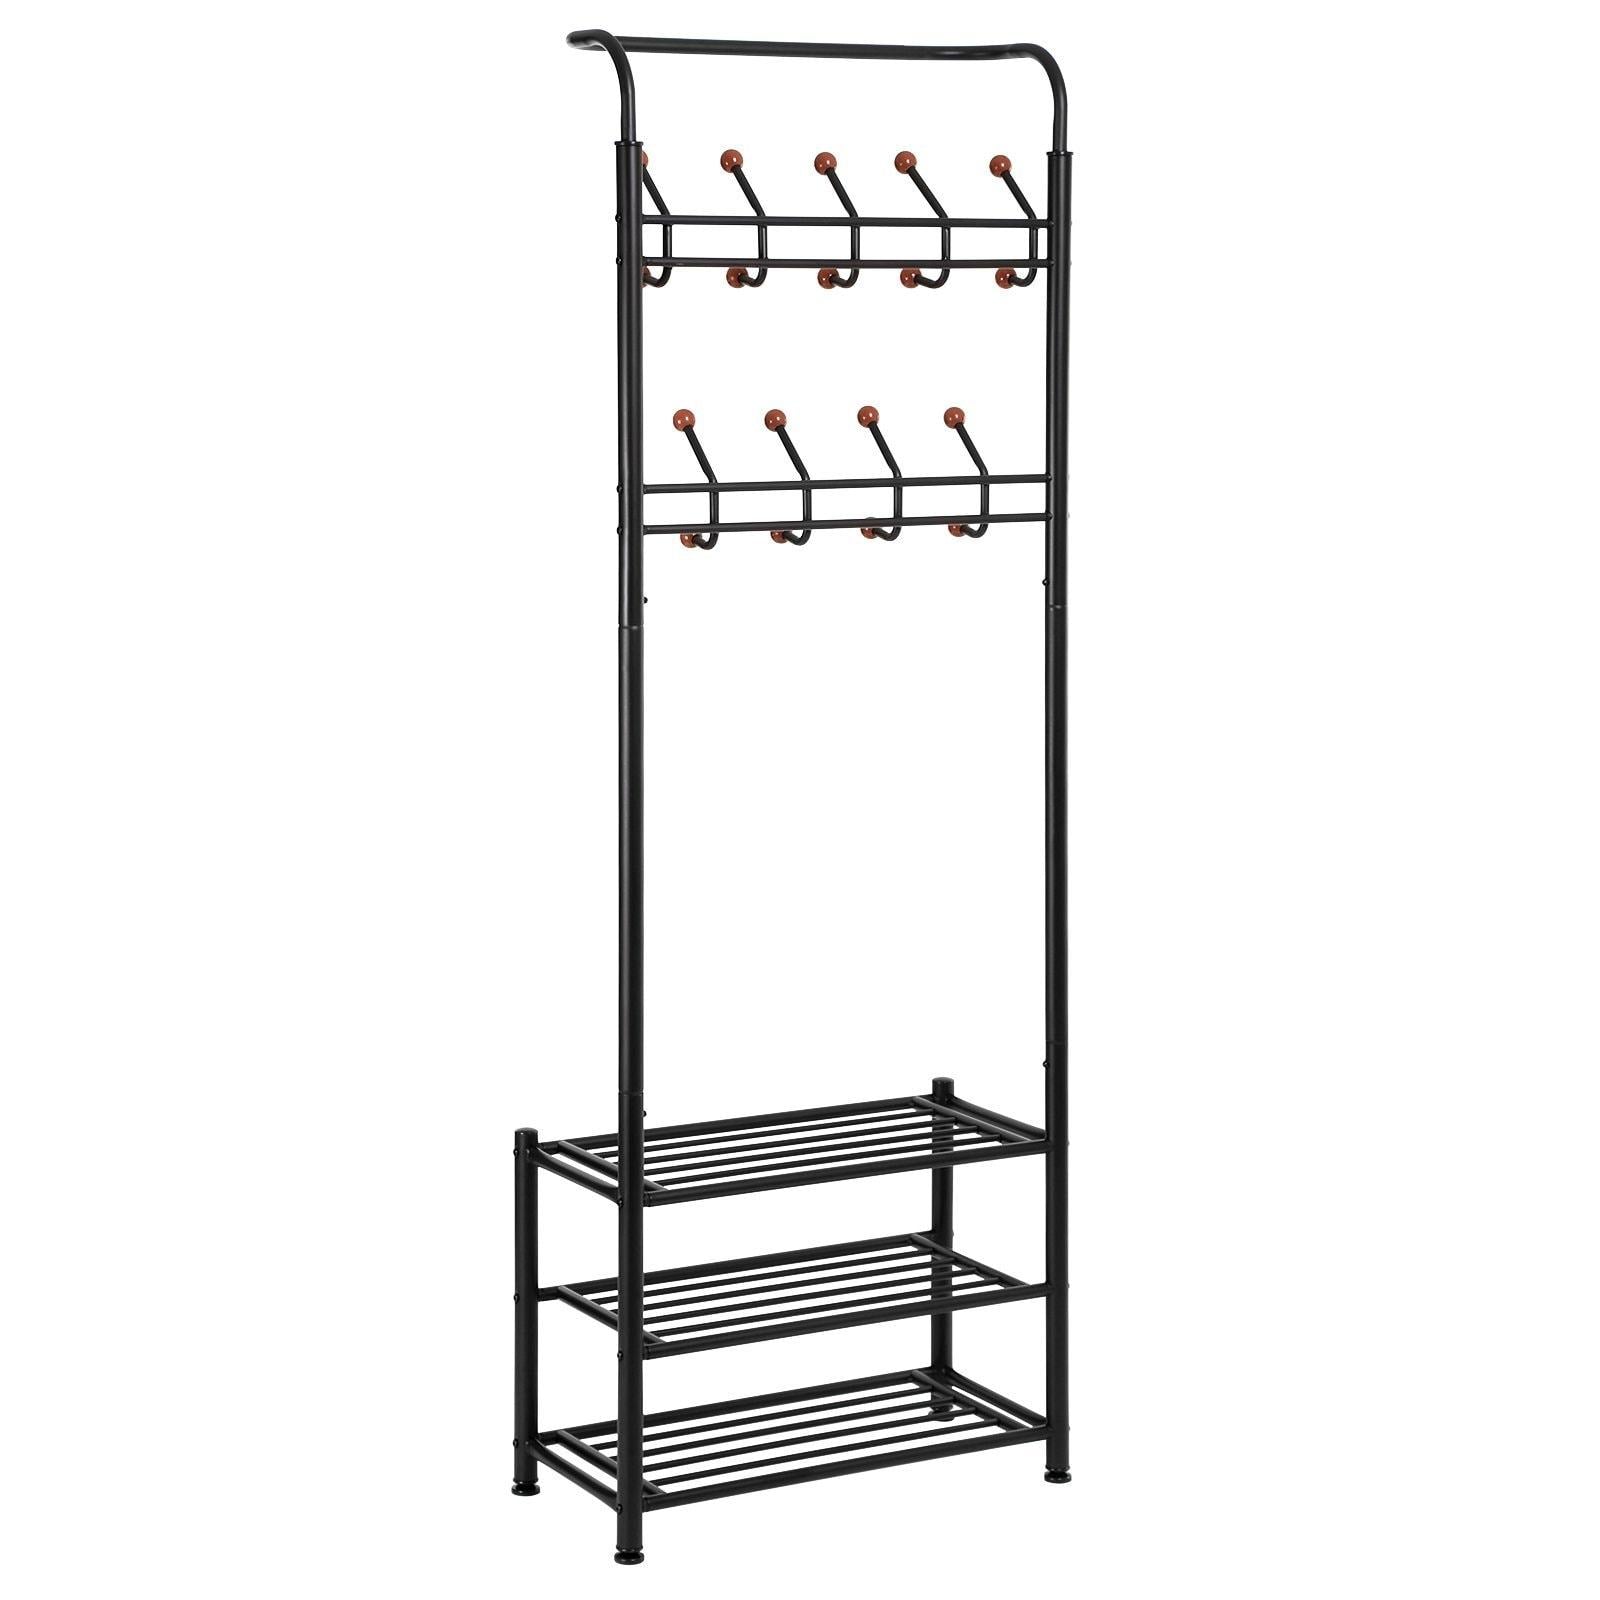 Home songmics entryway coat rack with storage shoe rack hallway organizer 18 hooks and 3 tier shelves metal black urcr67b